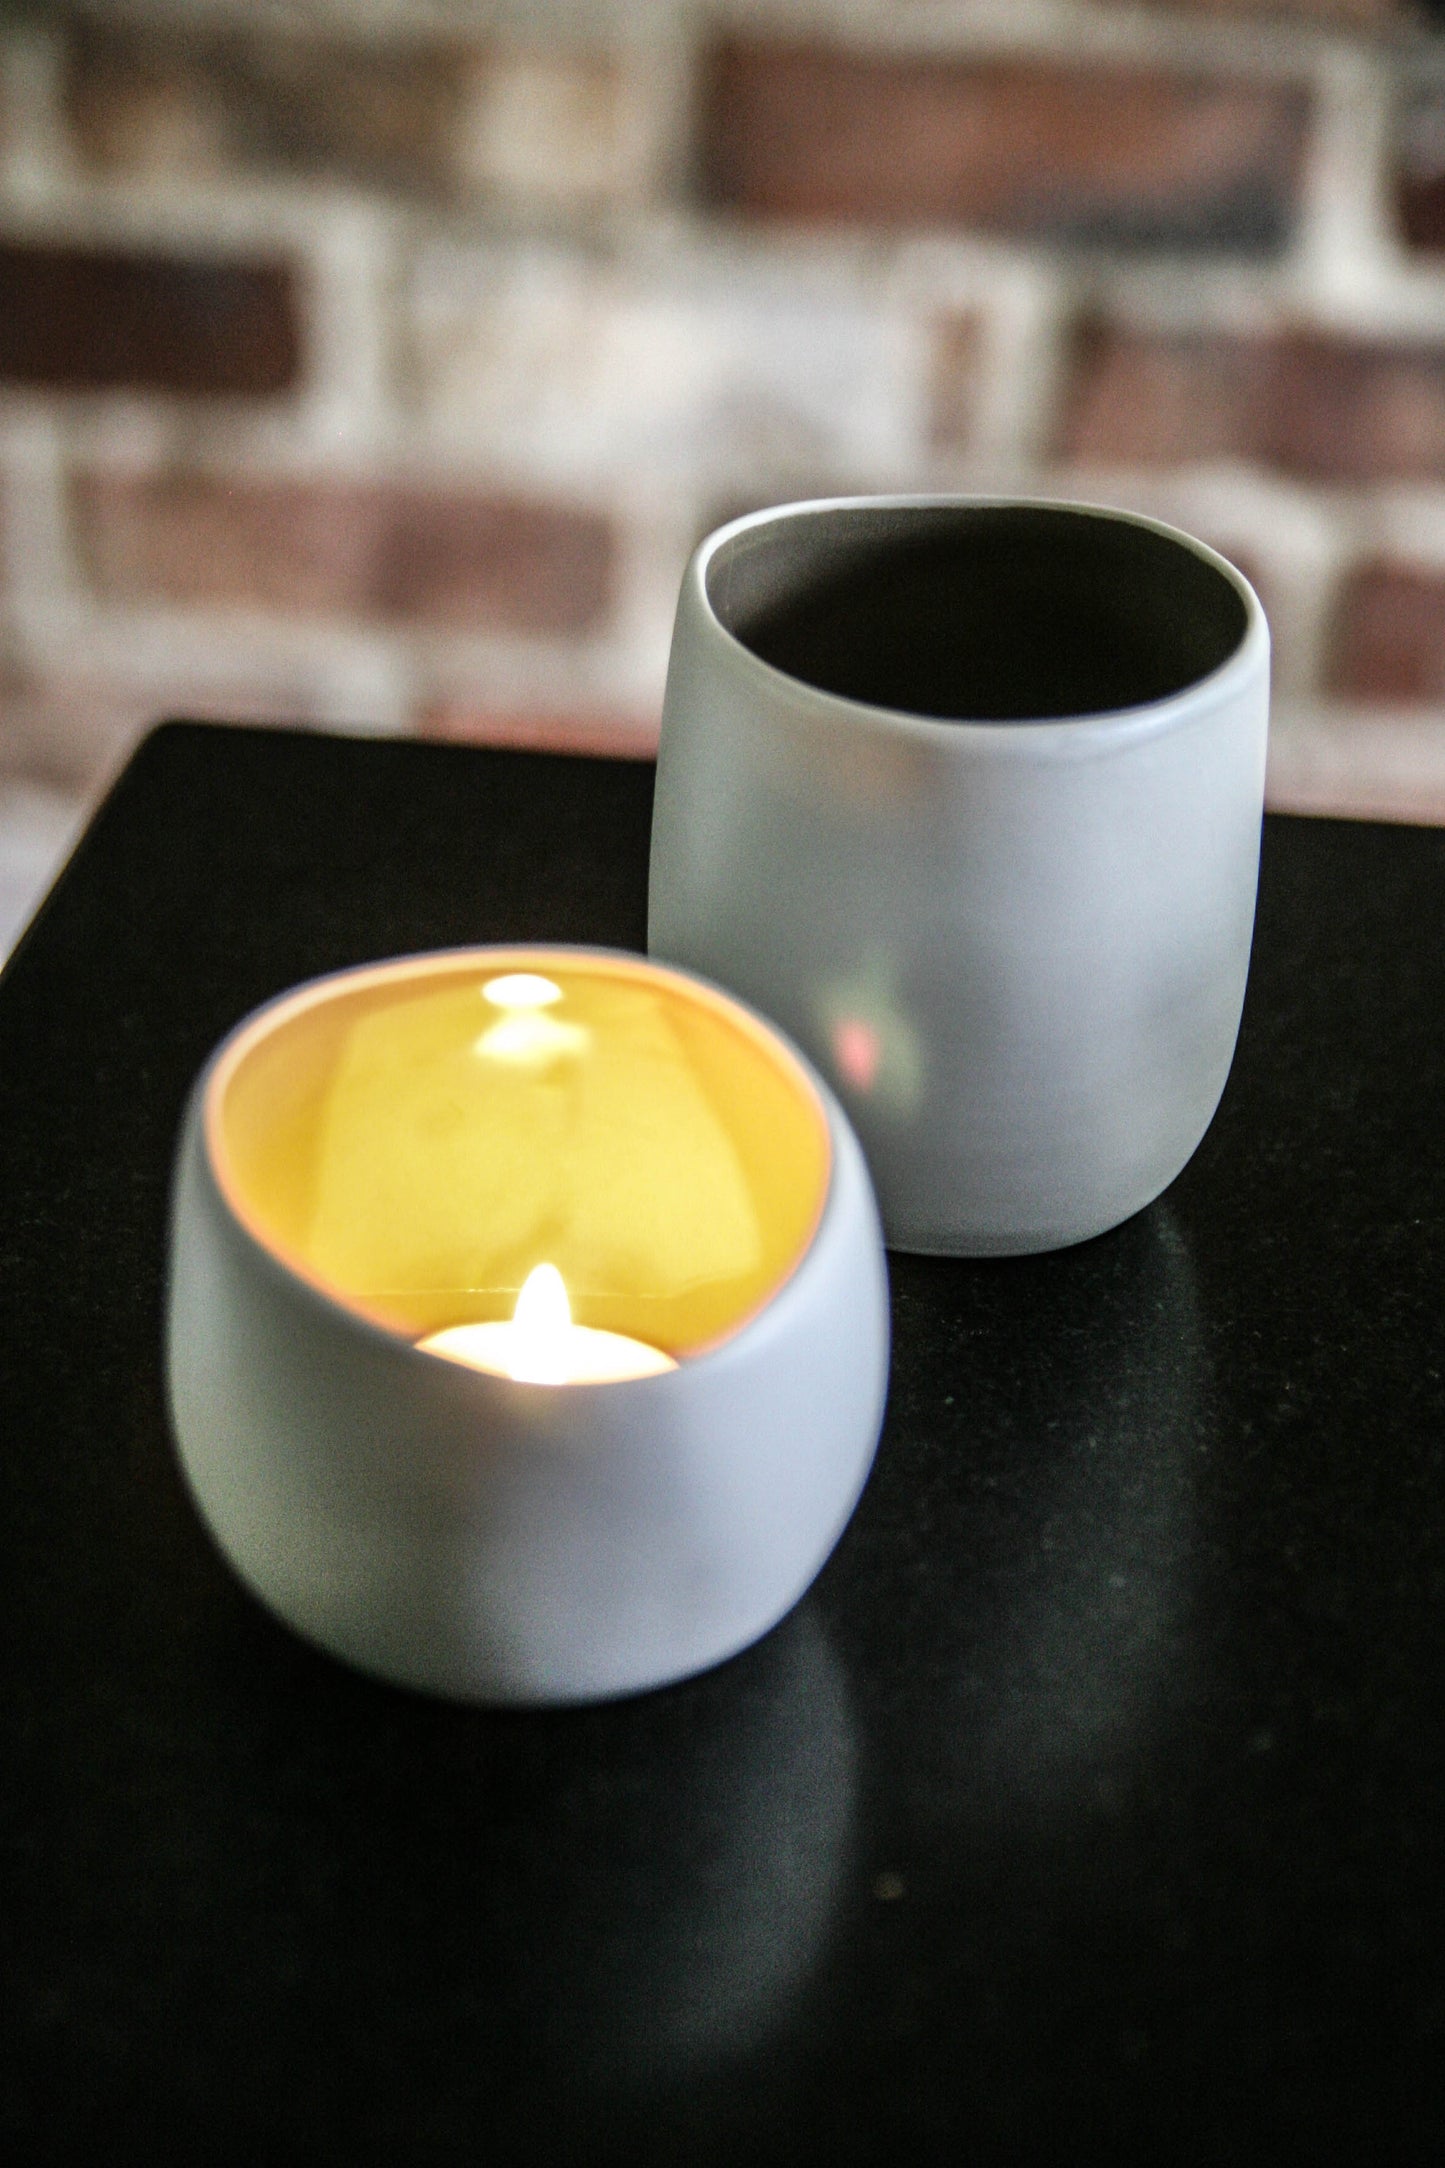 Tall Ceramic Tealight Vase - White/Taupe